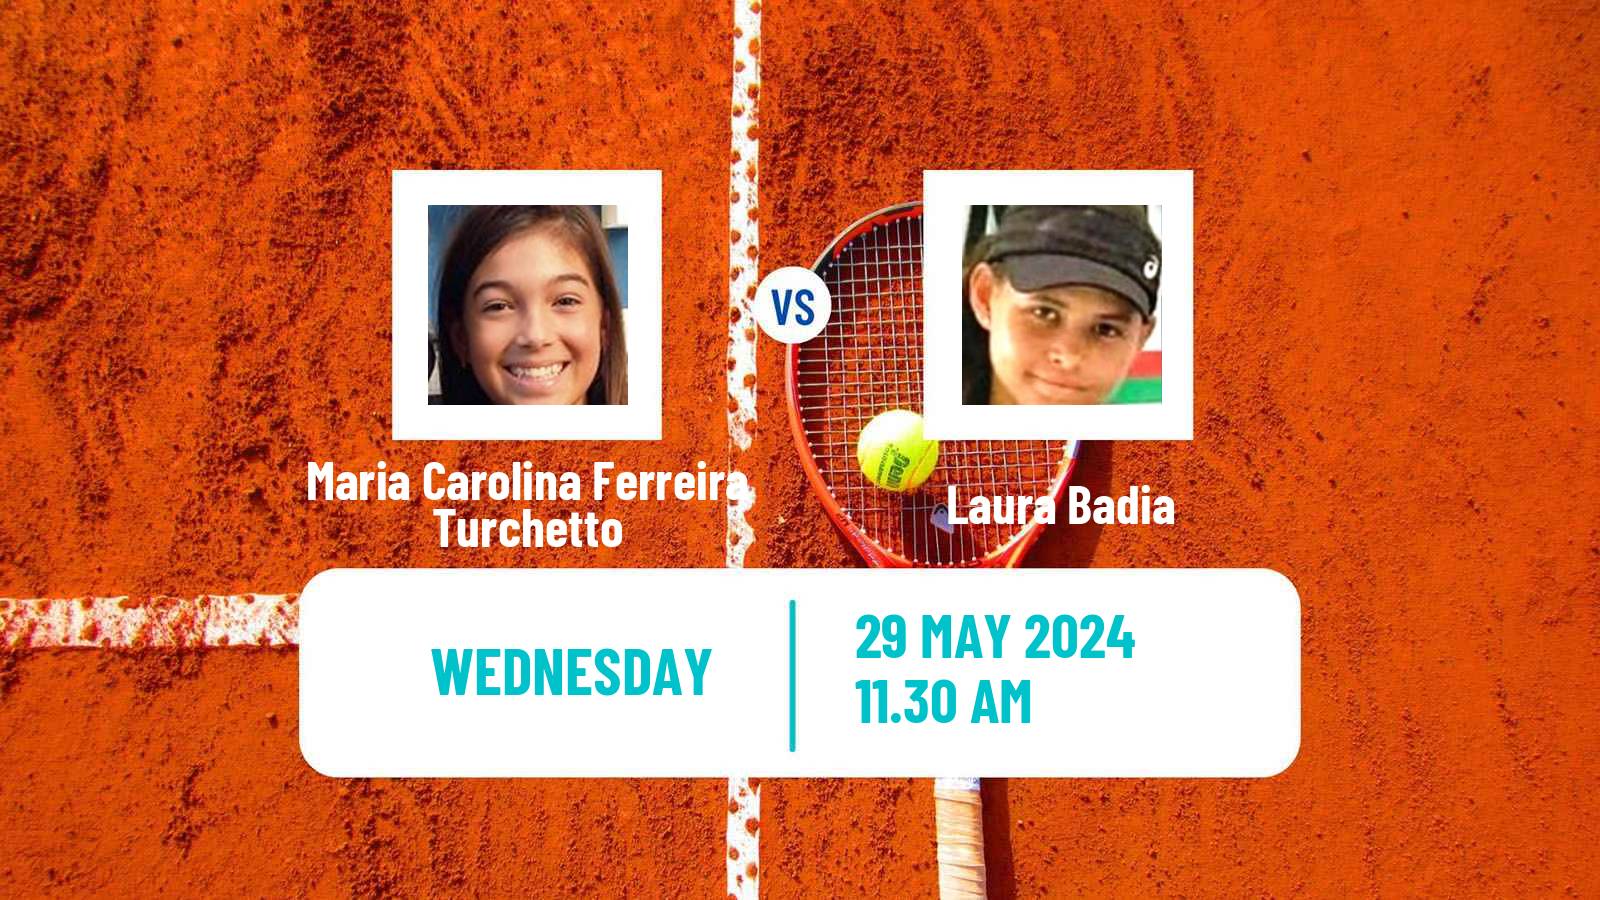 Tennis ITF W15 Rio Claro Women Maria Carolina Ferreira Turchetto - Laura Badia